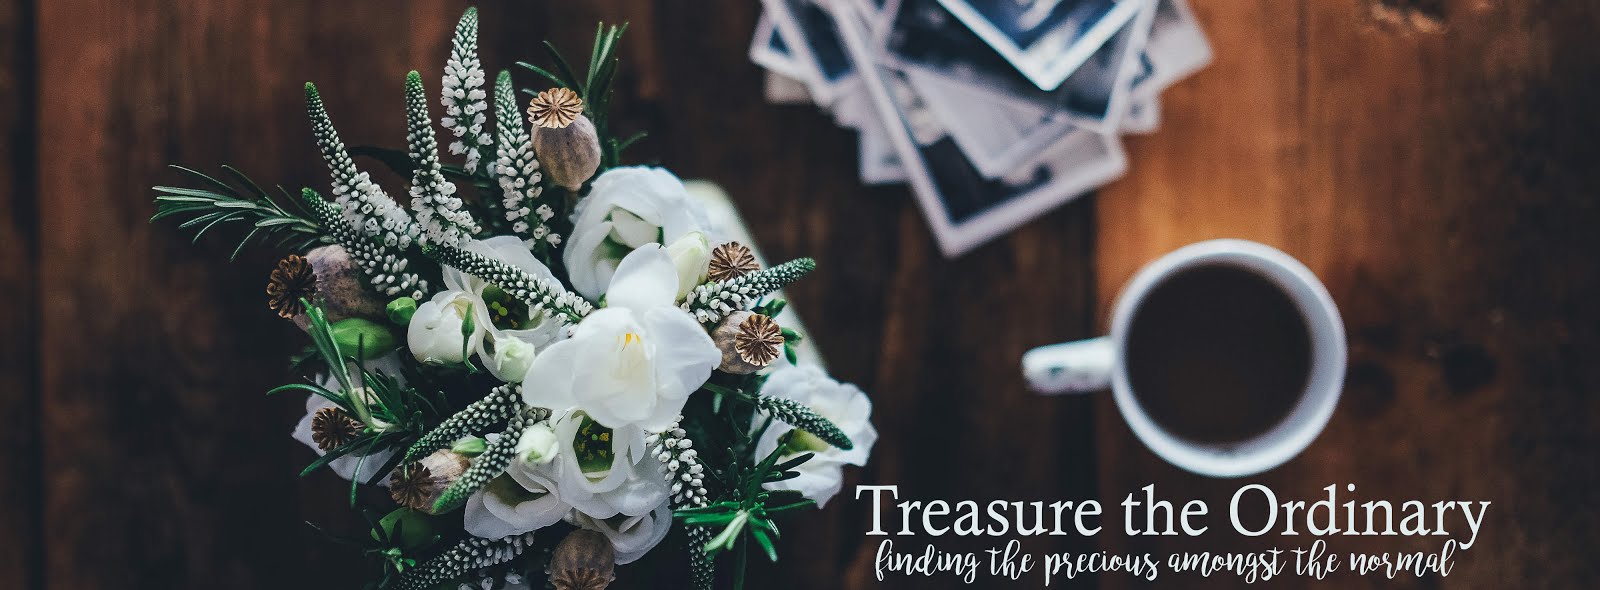 Treasure the Ordinary